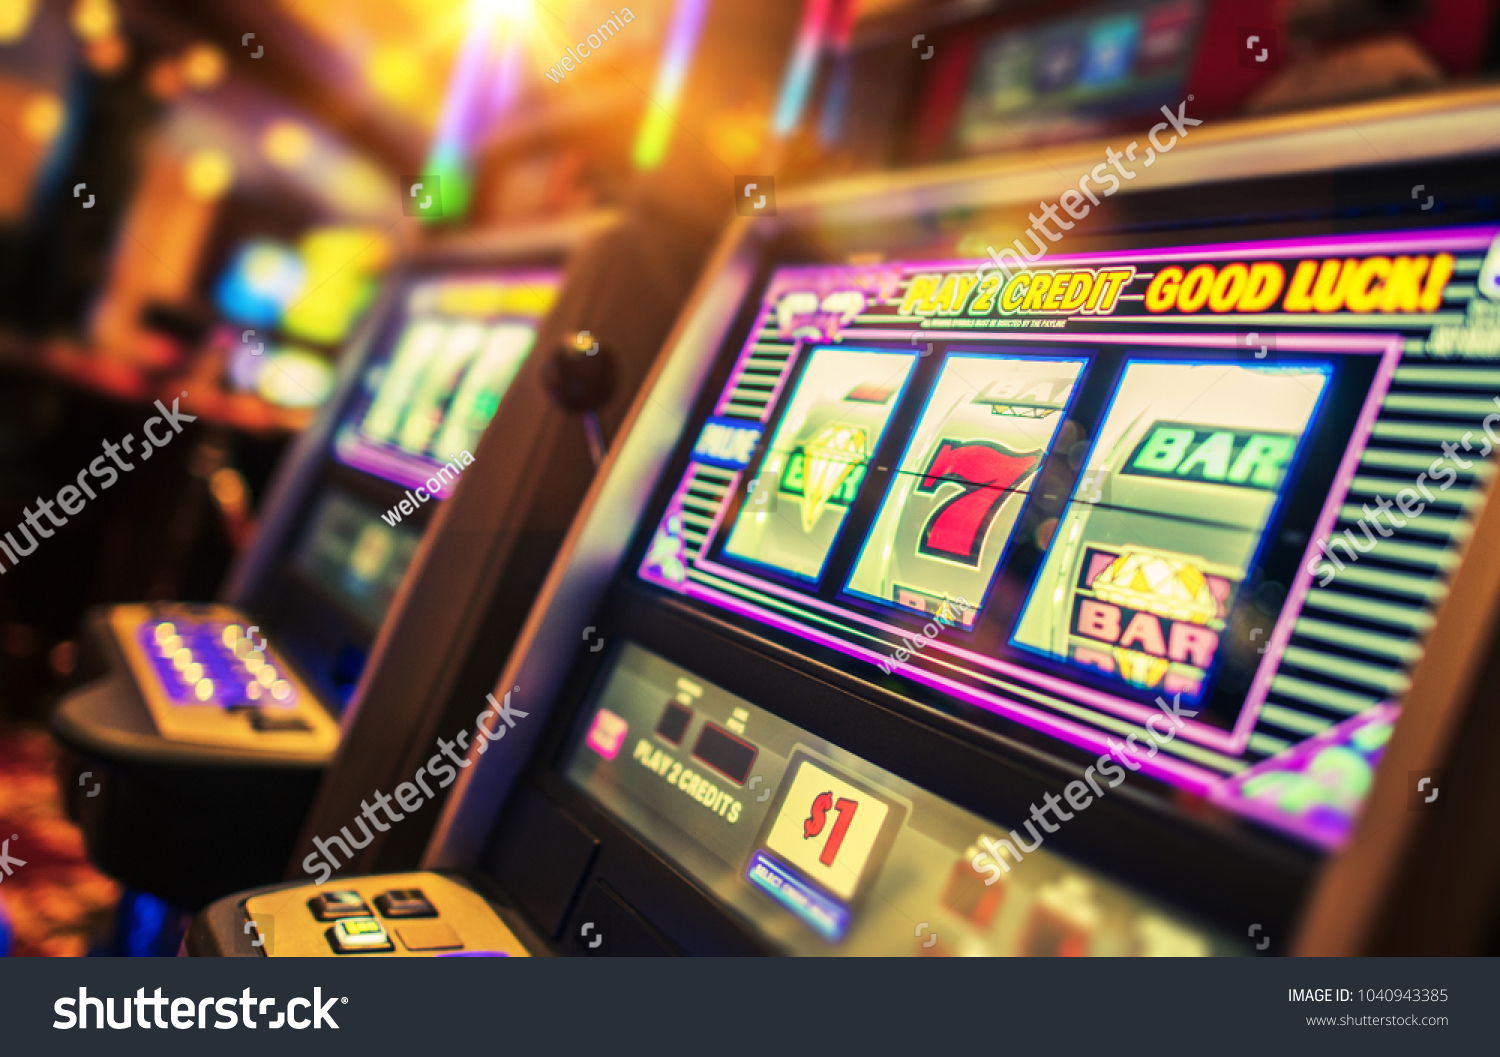 Casino Interior and Row of Classic Slot Machines. Las Vegas Gambling Theme. #1040943385